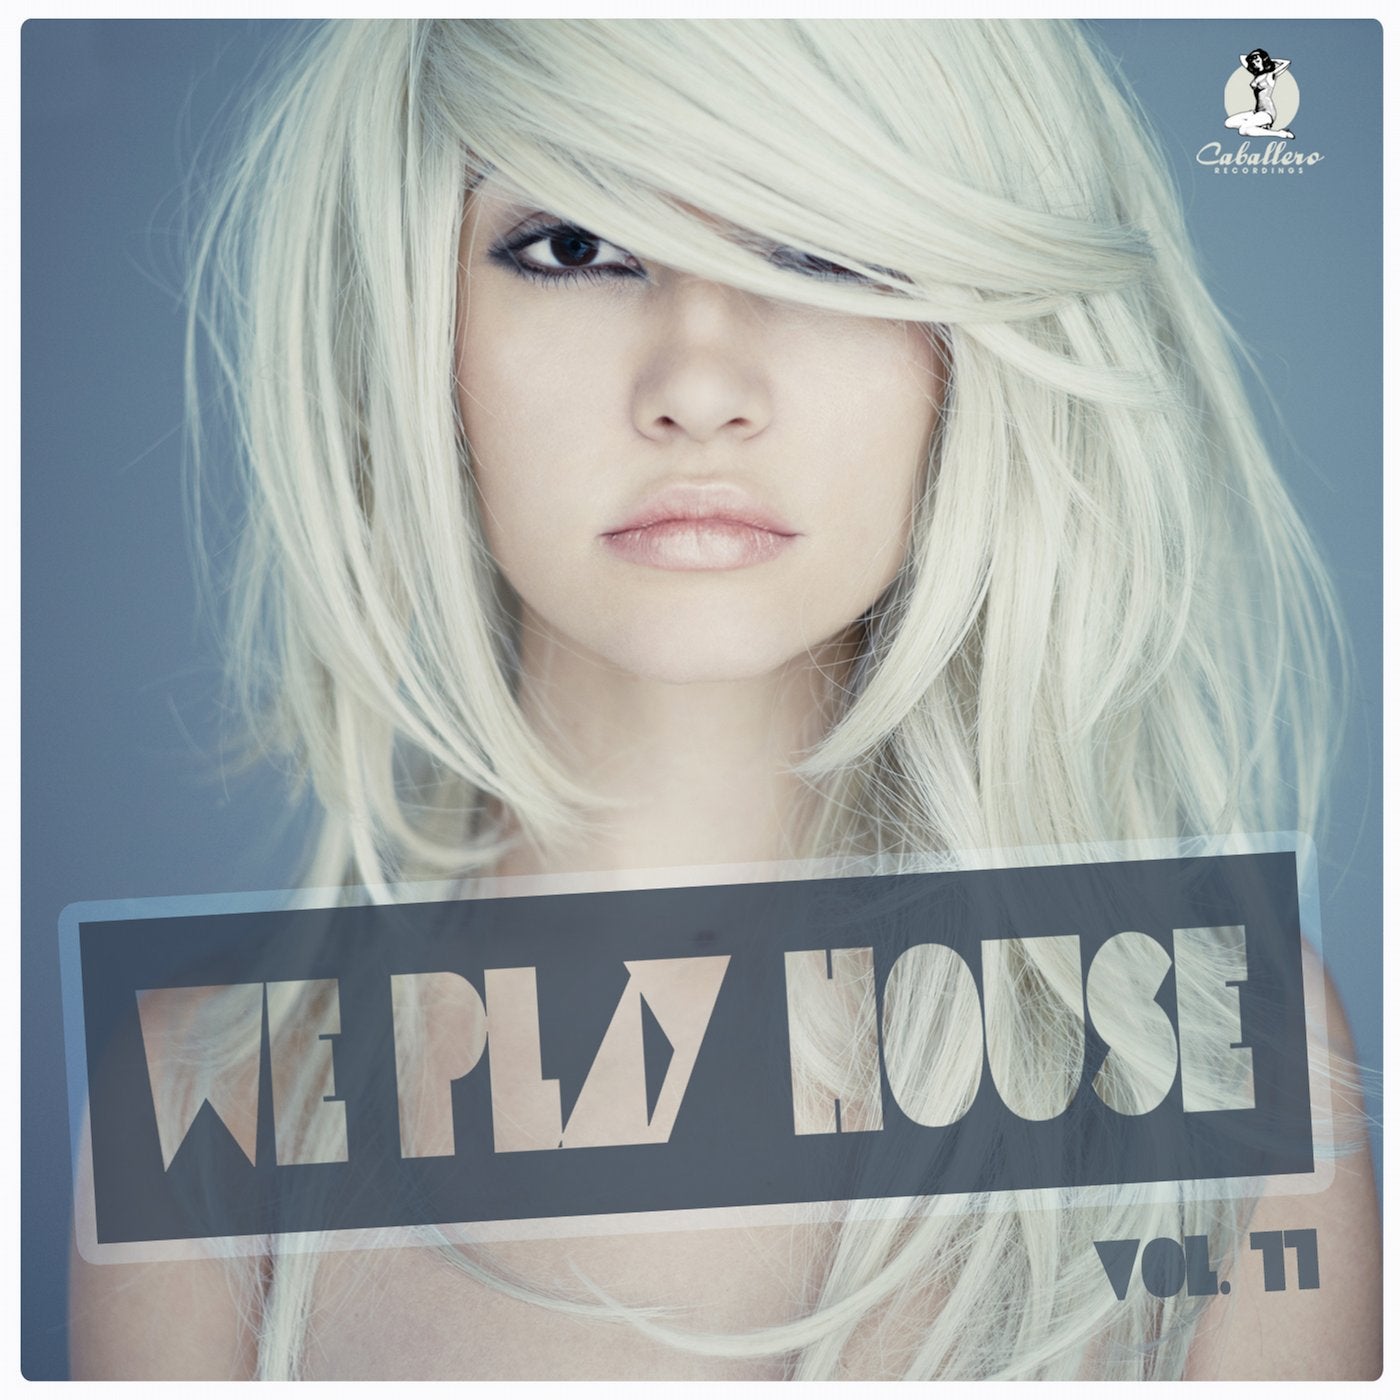 We Play House, Vol. 11